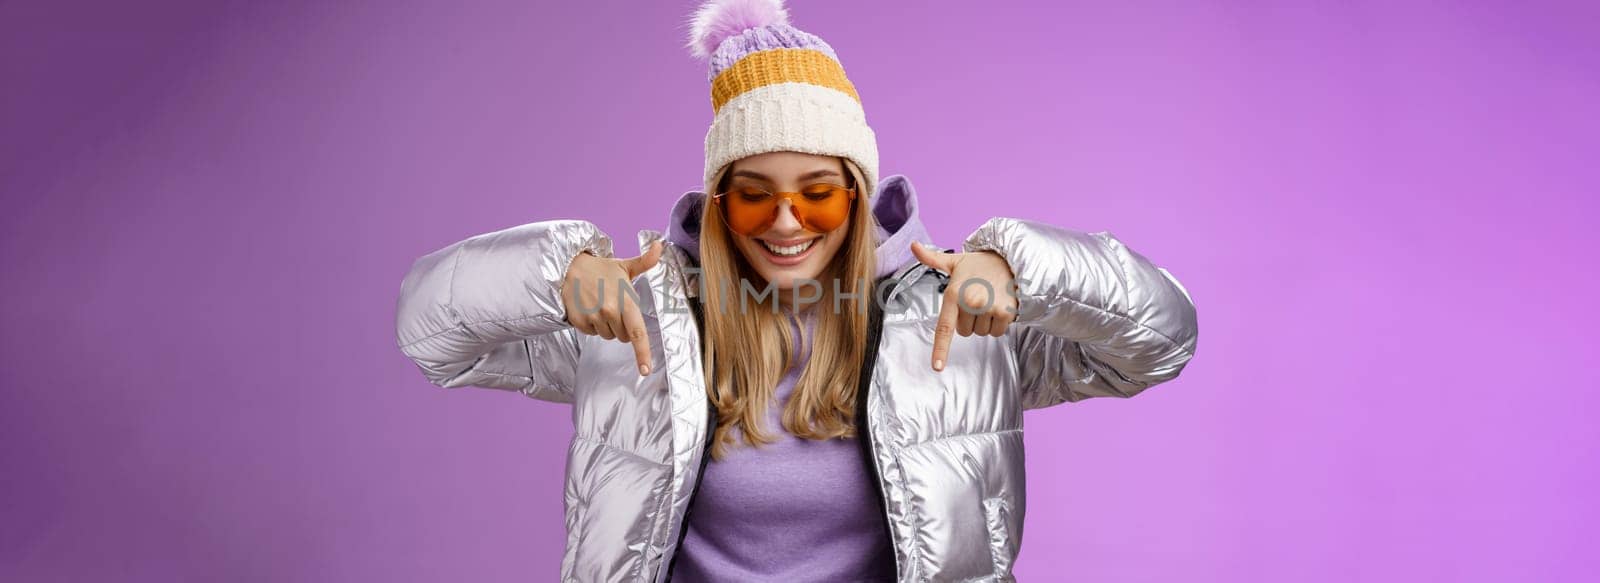 Joyful stylish blond woman in silver jacket stylish sunglasses jat enjoying perfect mountains view snowy vacation resort look pointing down smiling amused having fun feel happy, purple background.